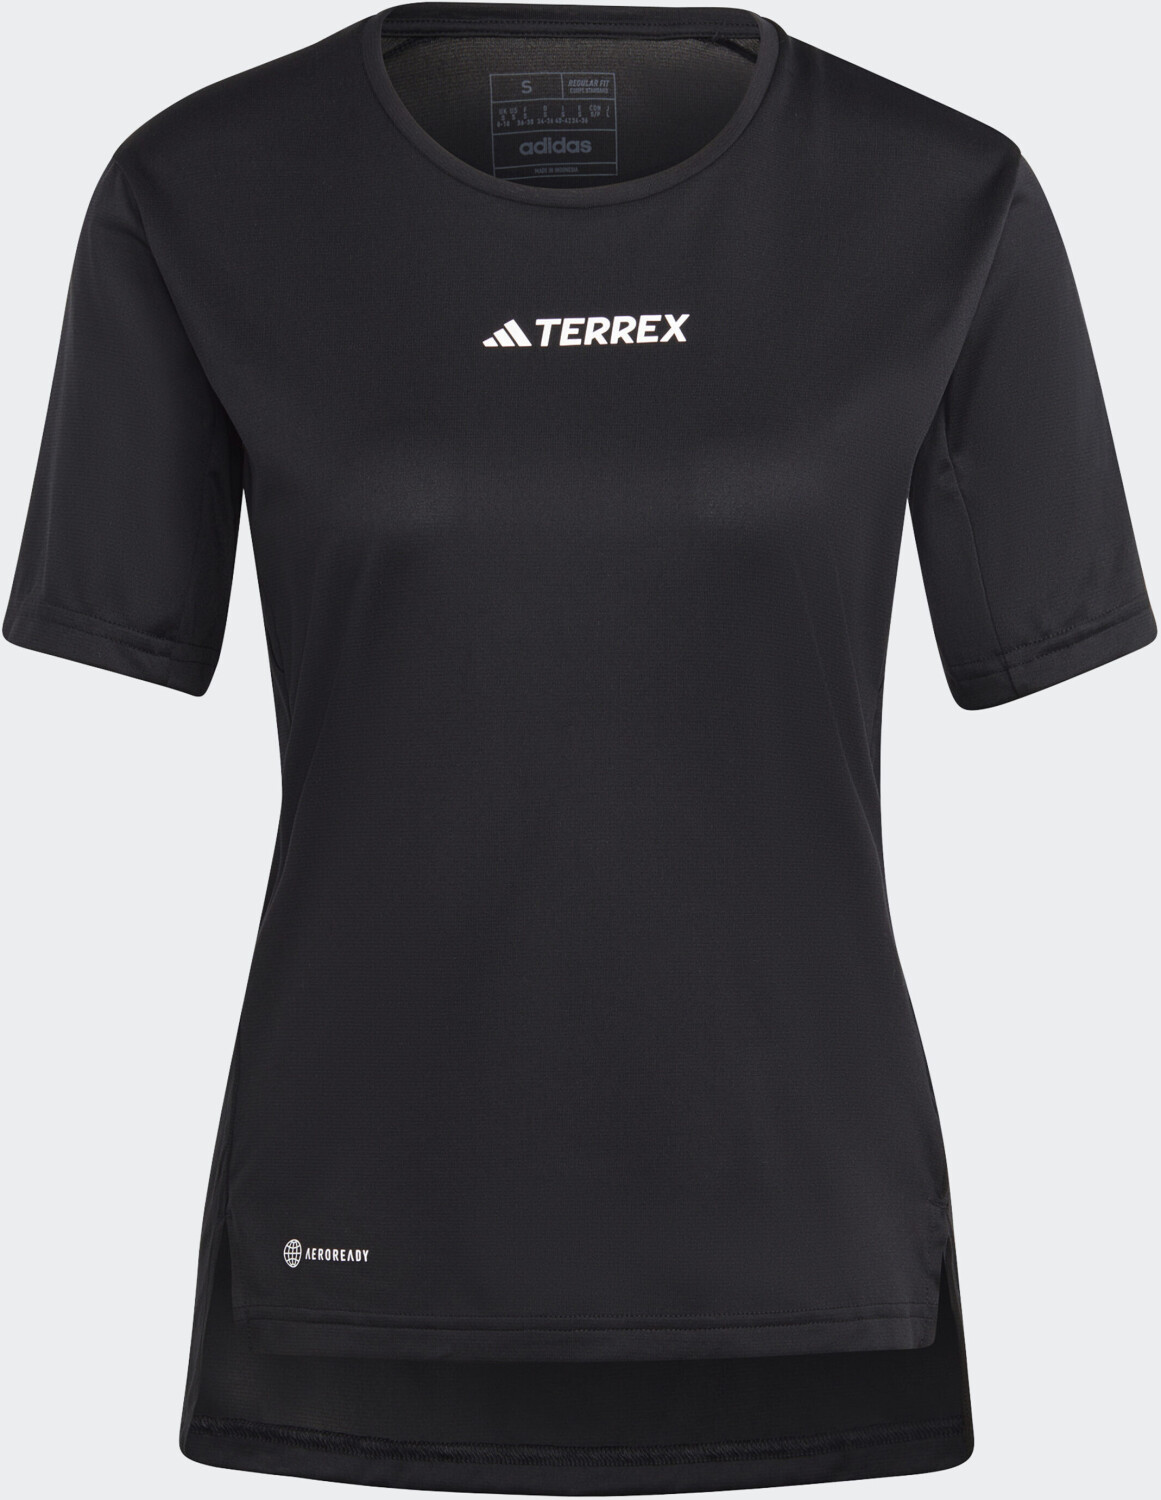 Adidas TERREX Multi bei € T-Shirt 25,99 | Preisvergleich black ab (HM4041)